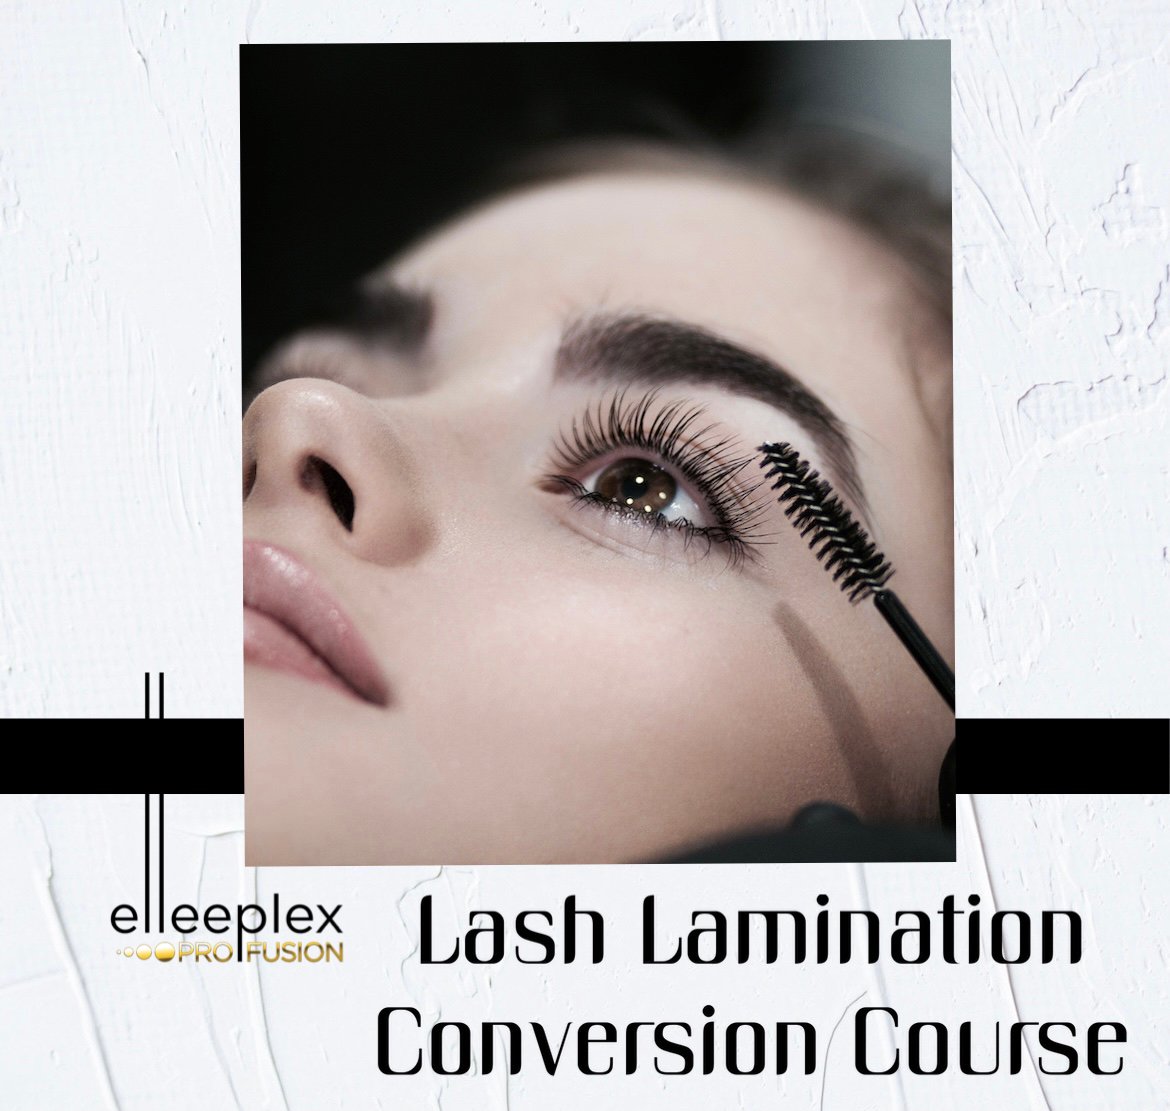 Elleeplex profusion Lash lamination conversion certification